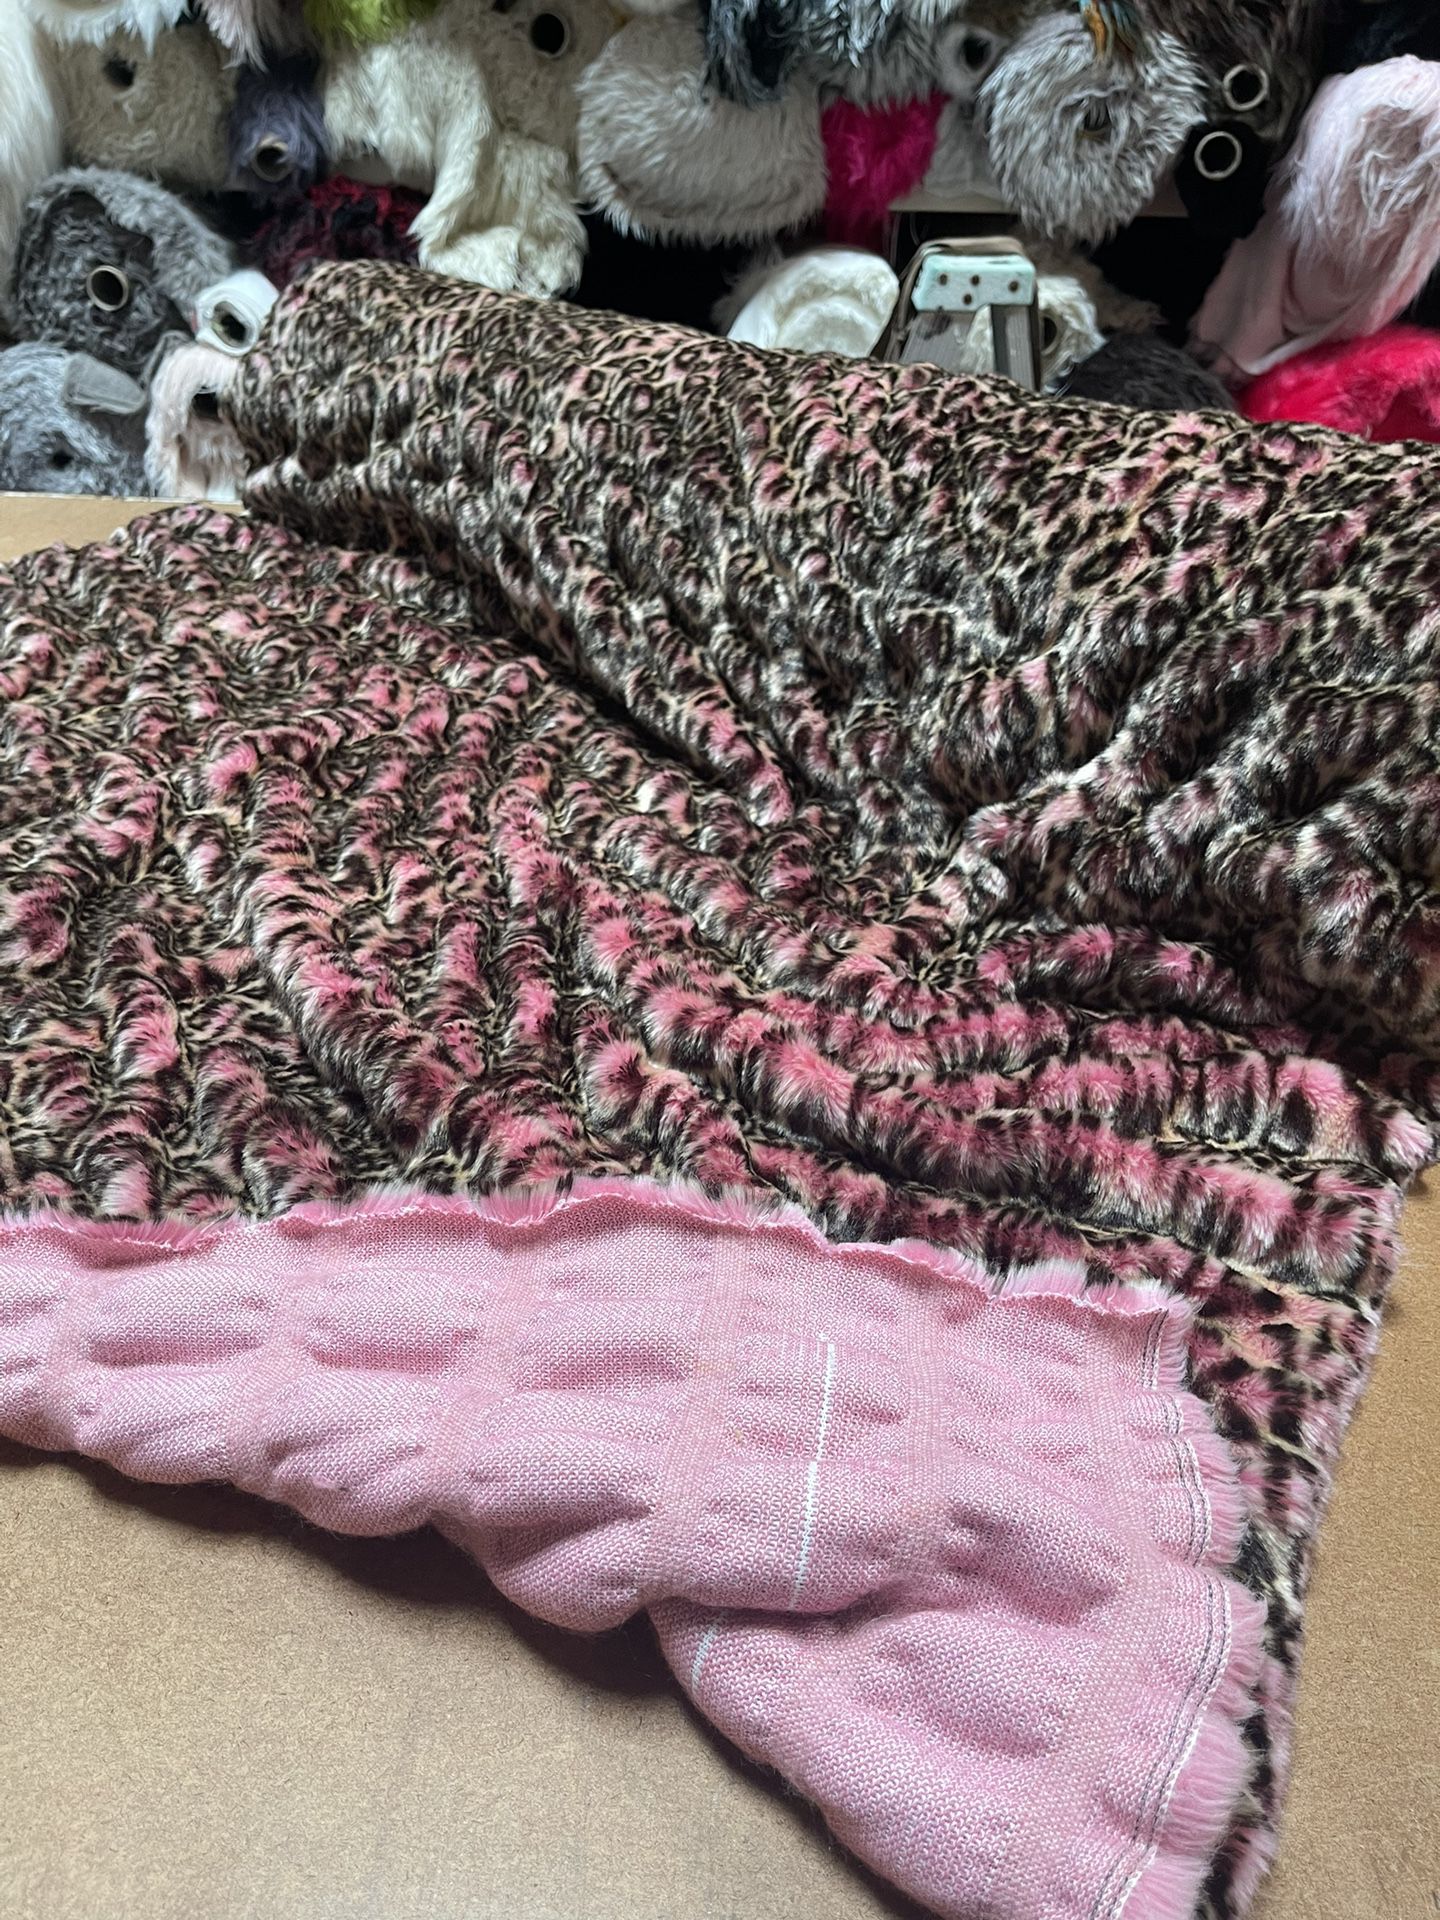 3 Yards Rose Leopard Faux Fur Fabric Roll Fur Accents Warehouse Liquidation Sale